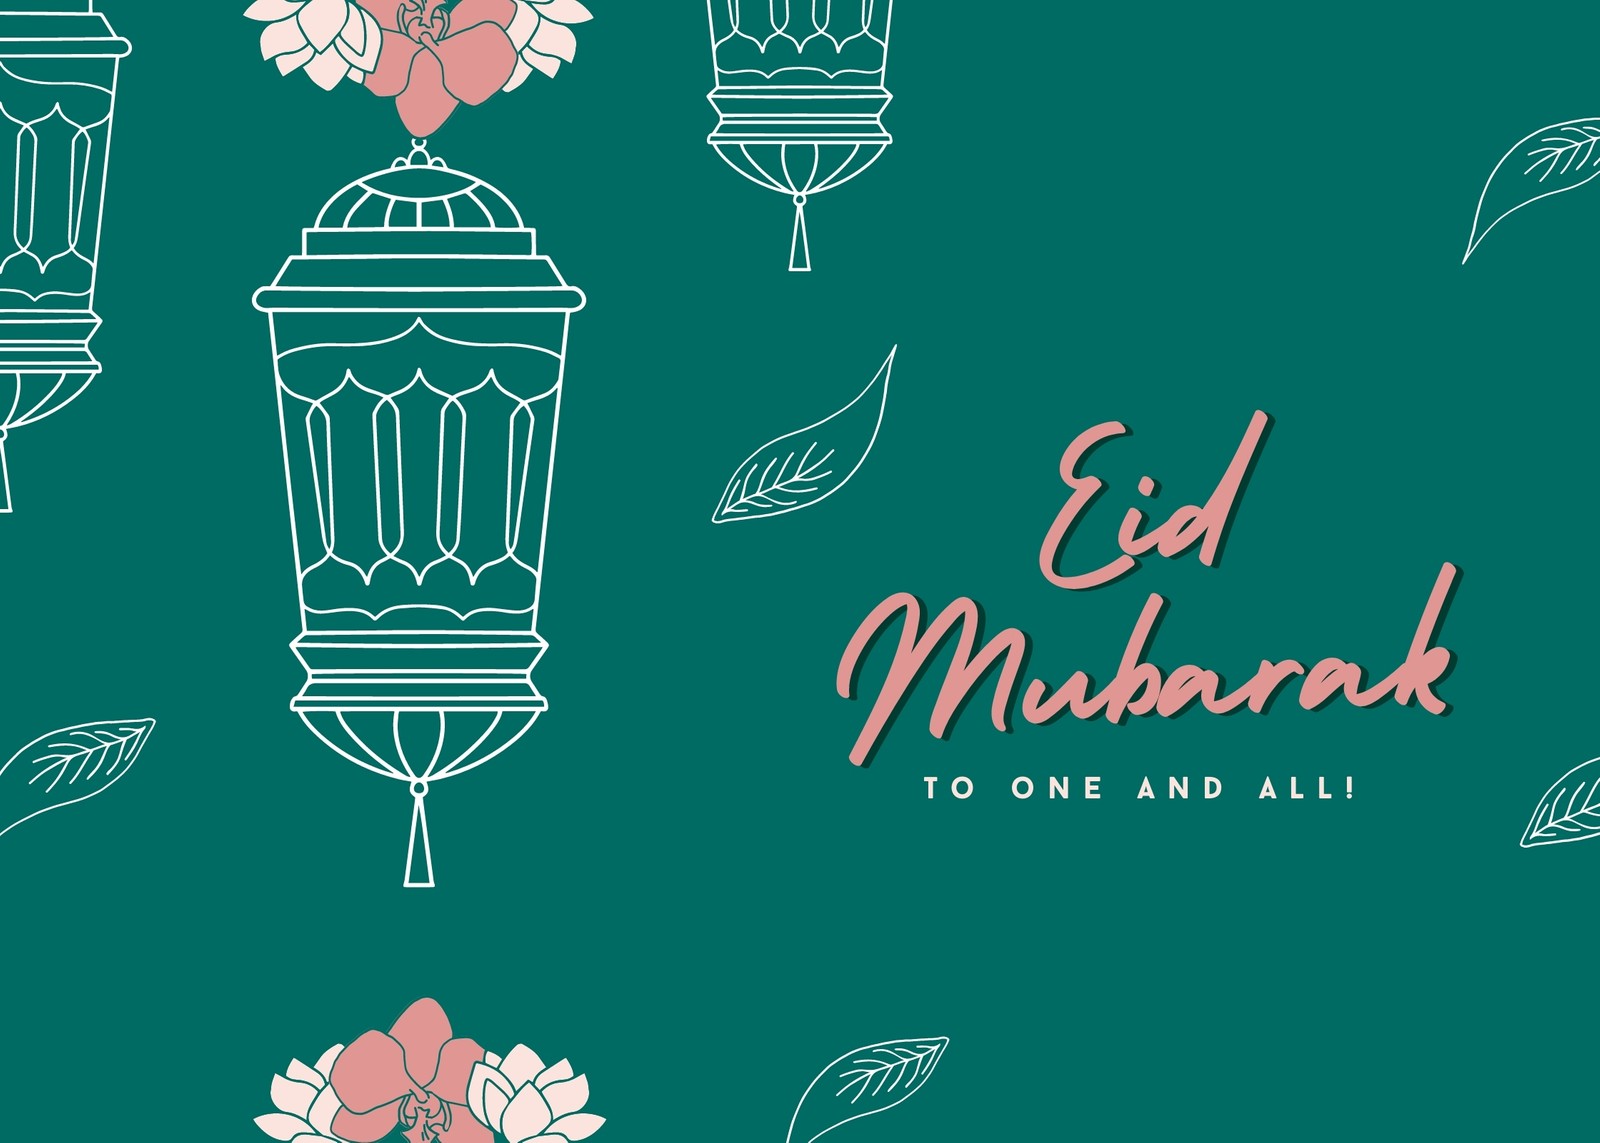 Creative Ways to Exchange Eid Greetings Digitally: Ideas & Apps - GET ...